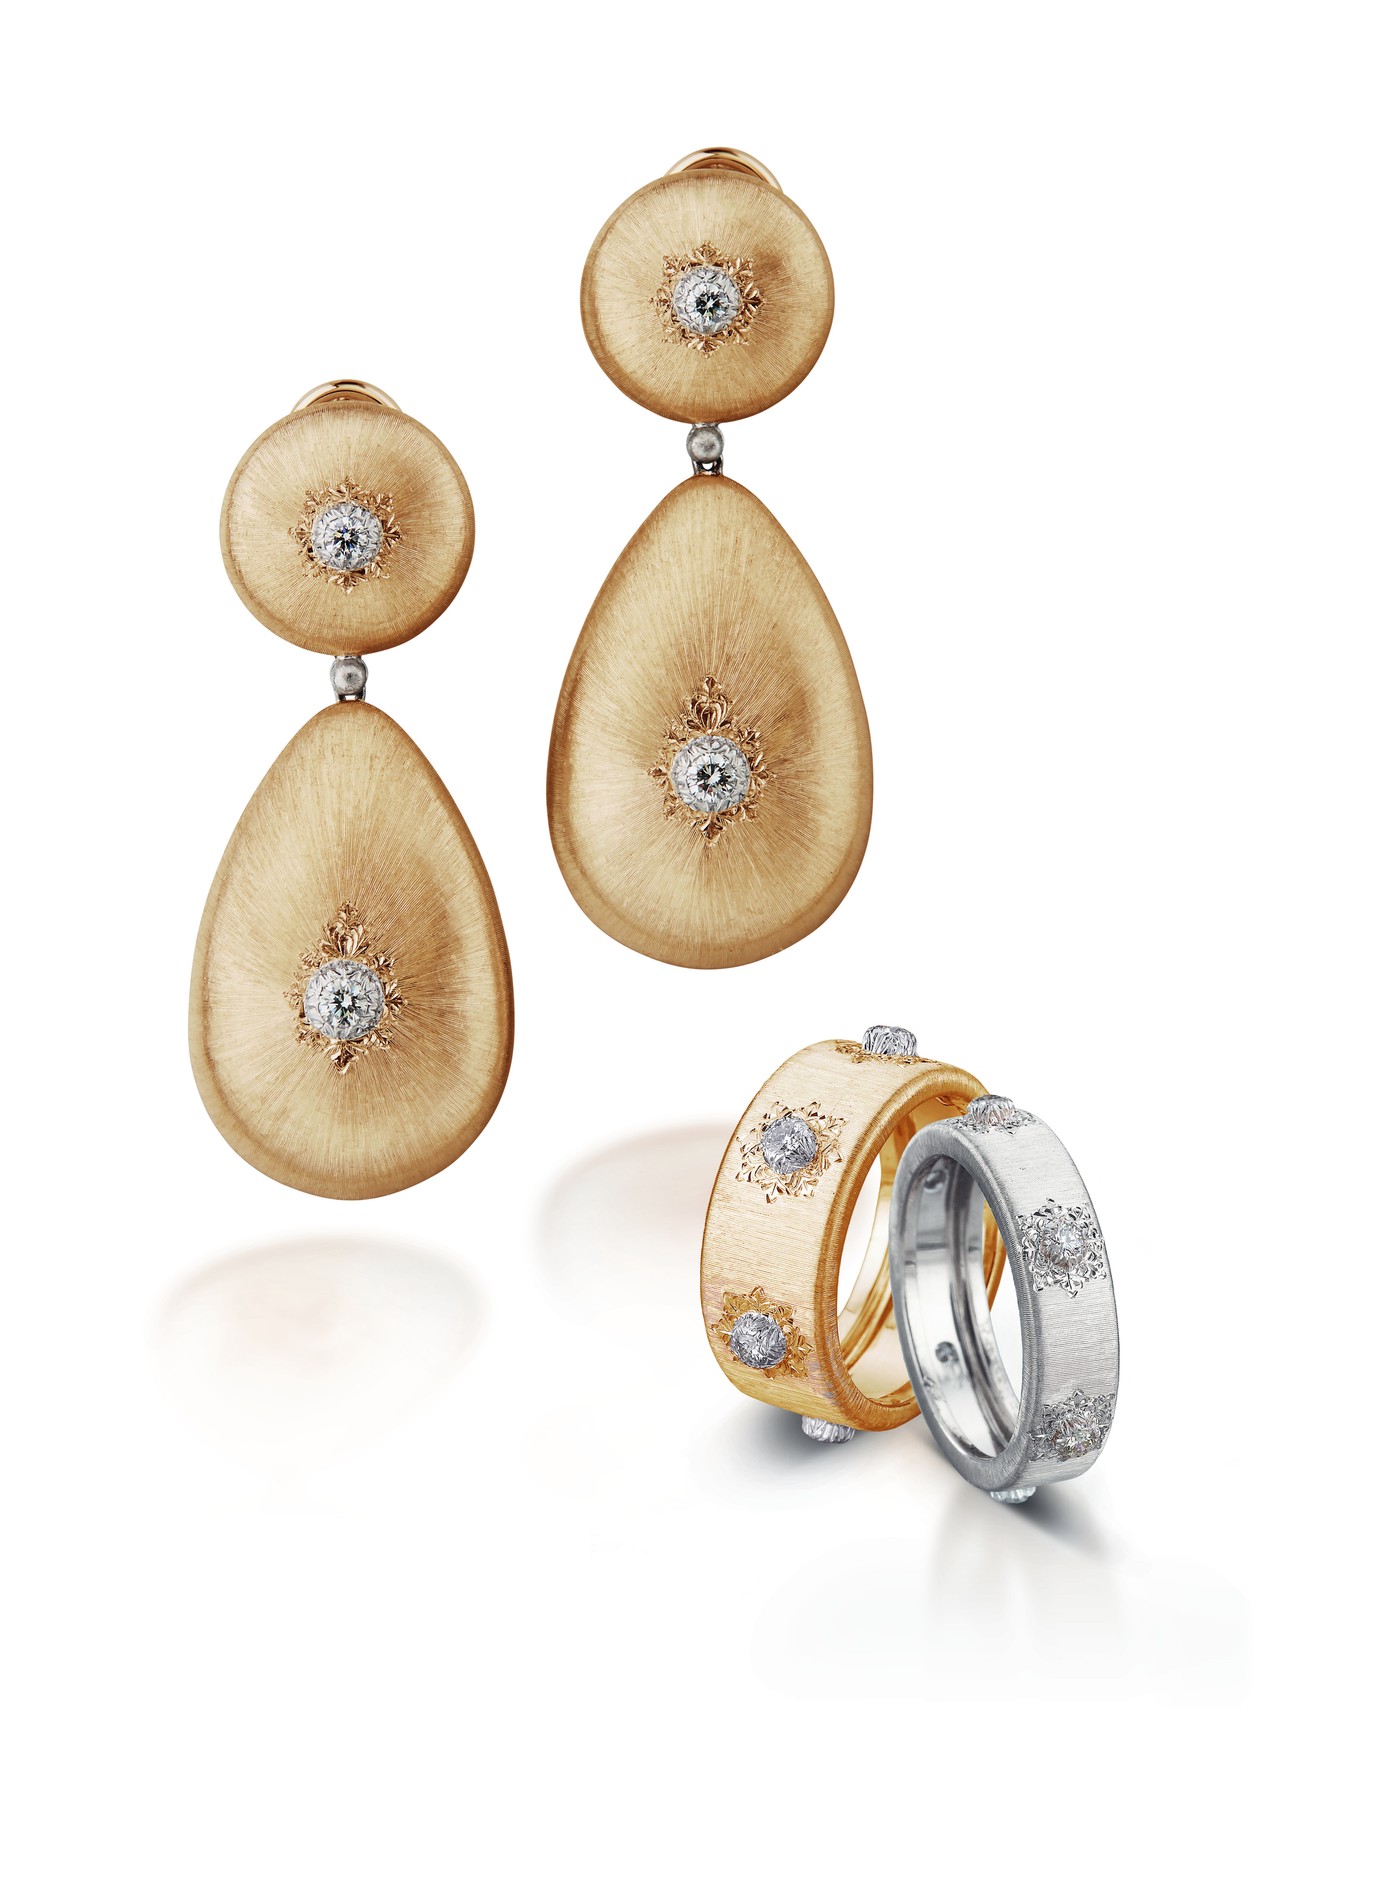 Boucles d’oreilles pendantes et bagues Macri Classica serties de diamants